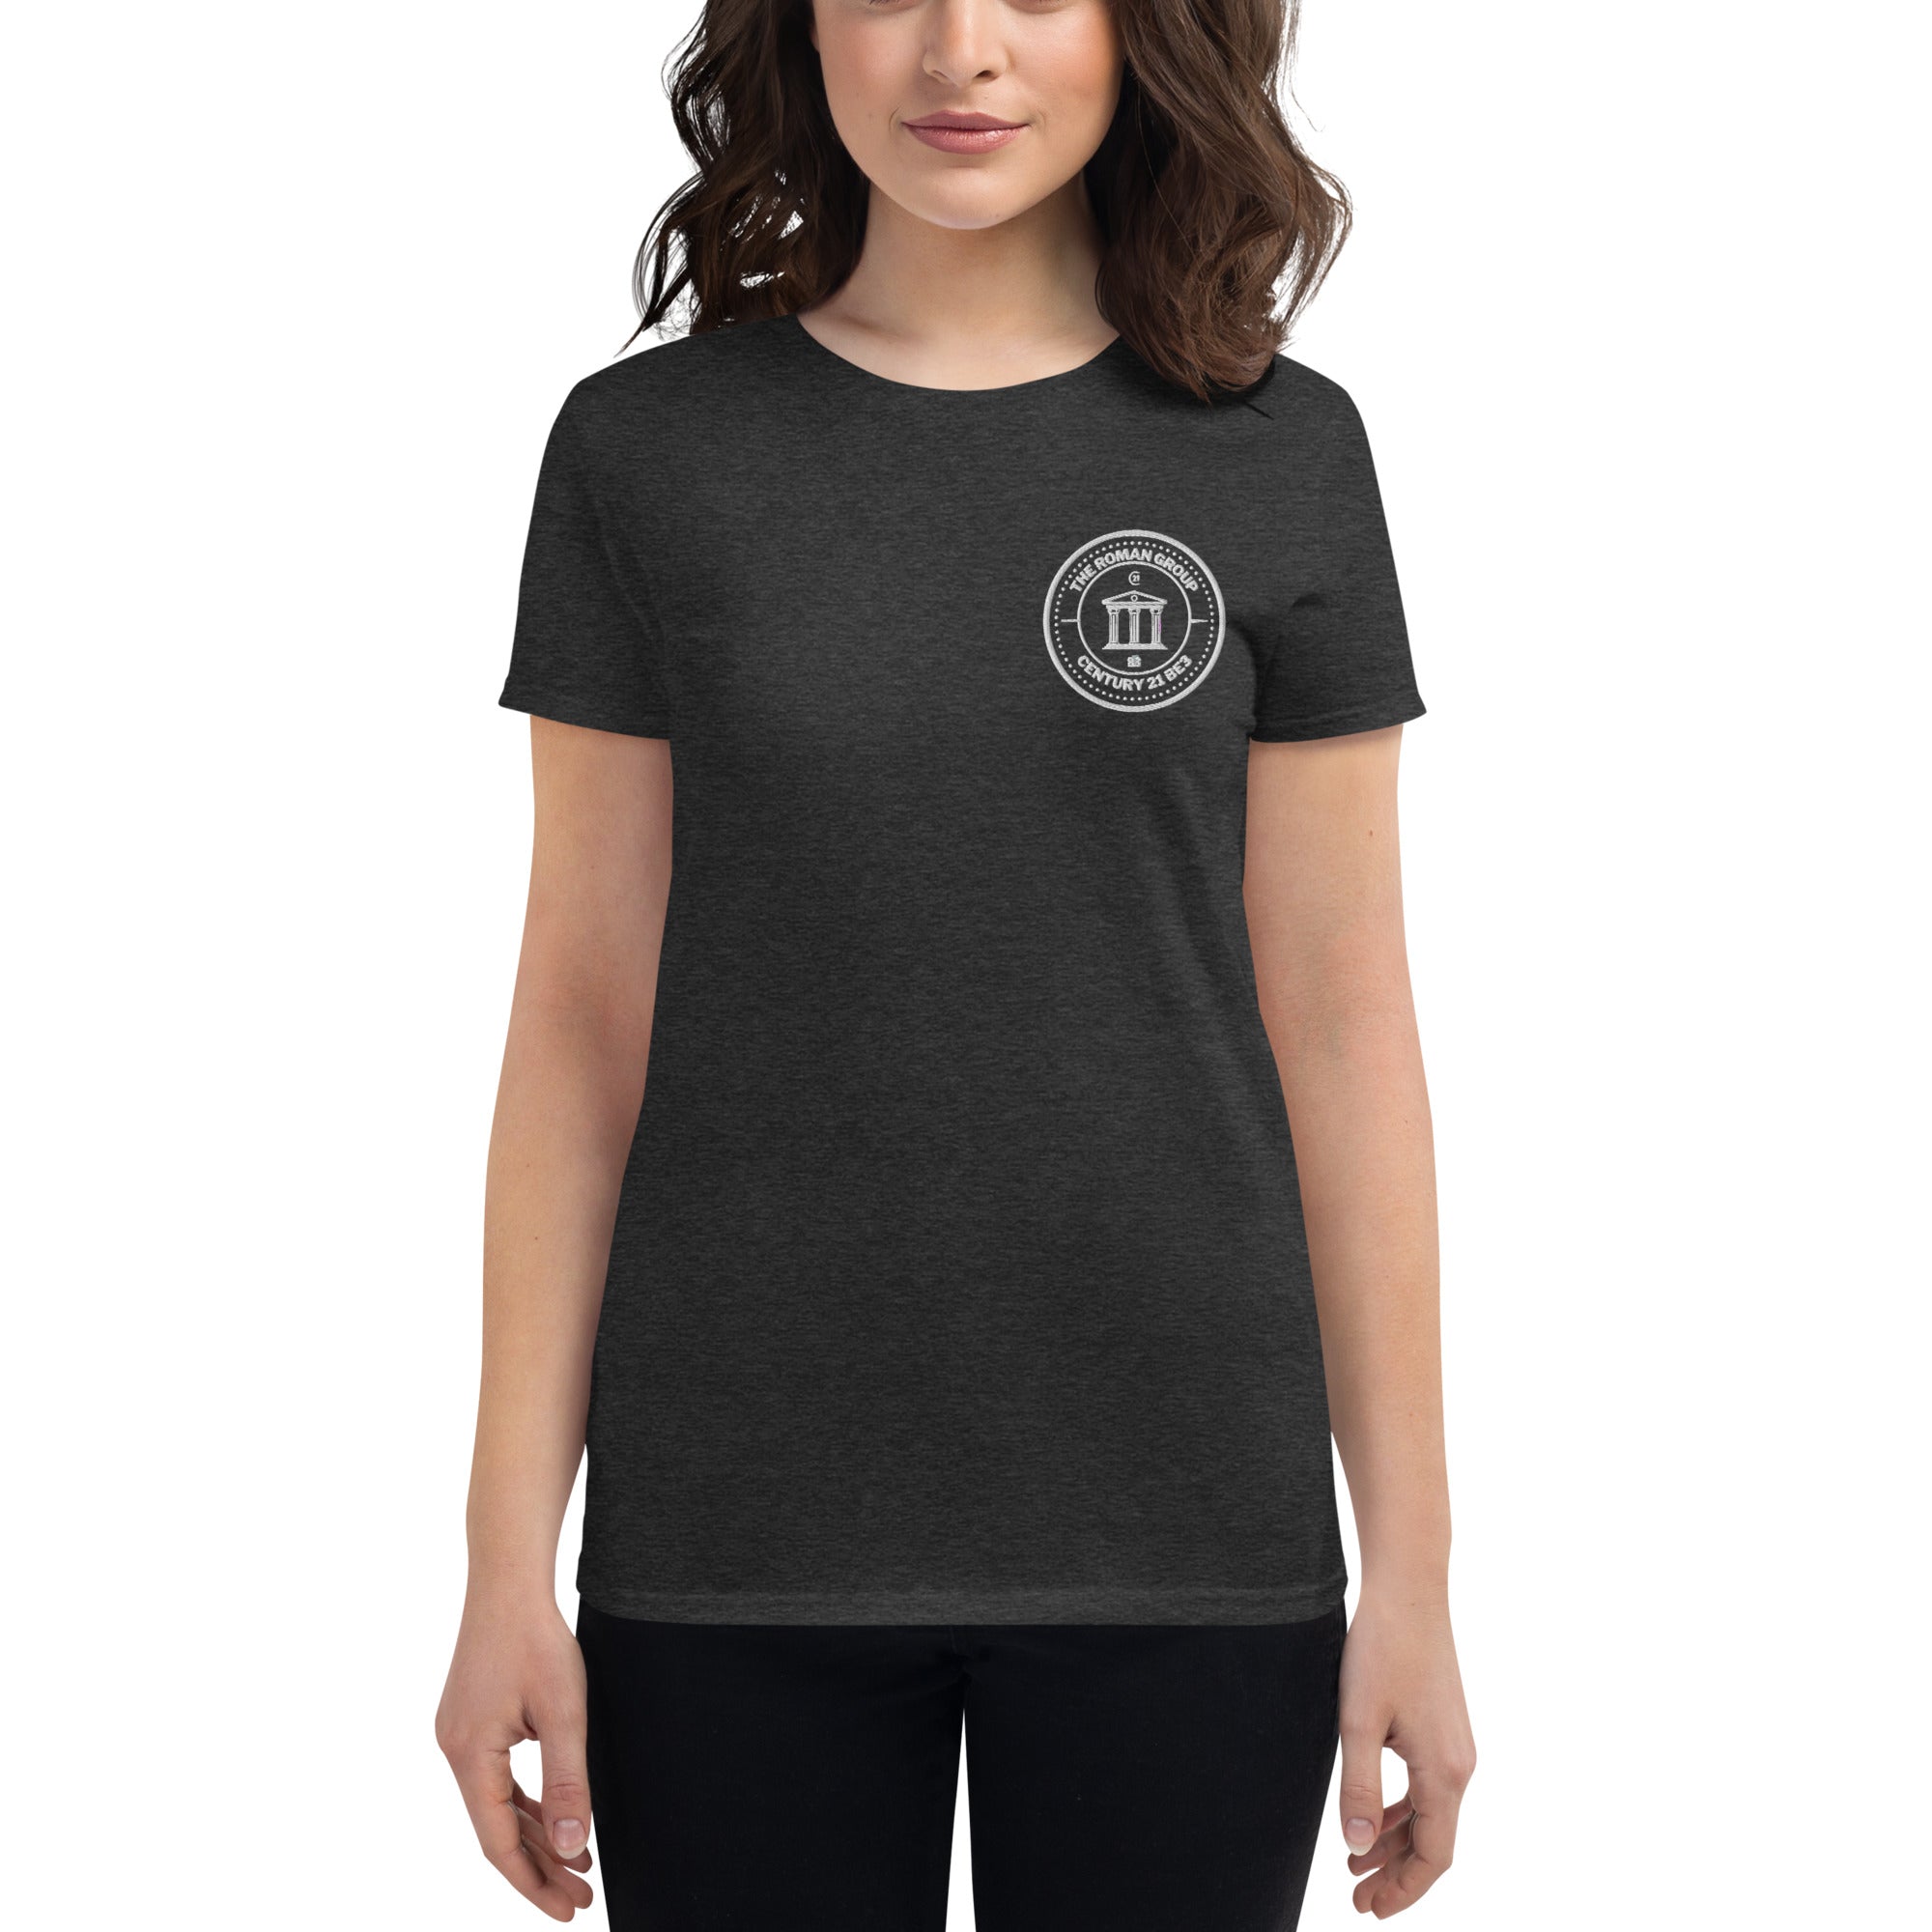 Roman Group Embroidered Women's short sleeve t-shirt